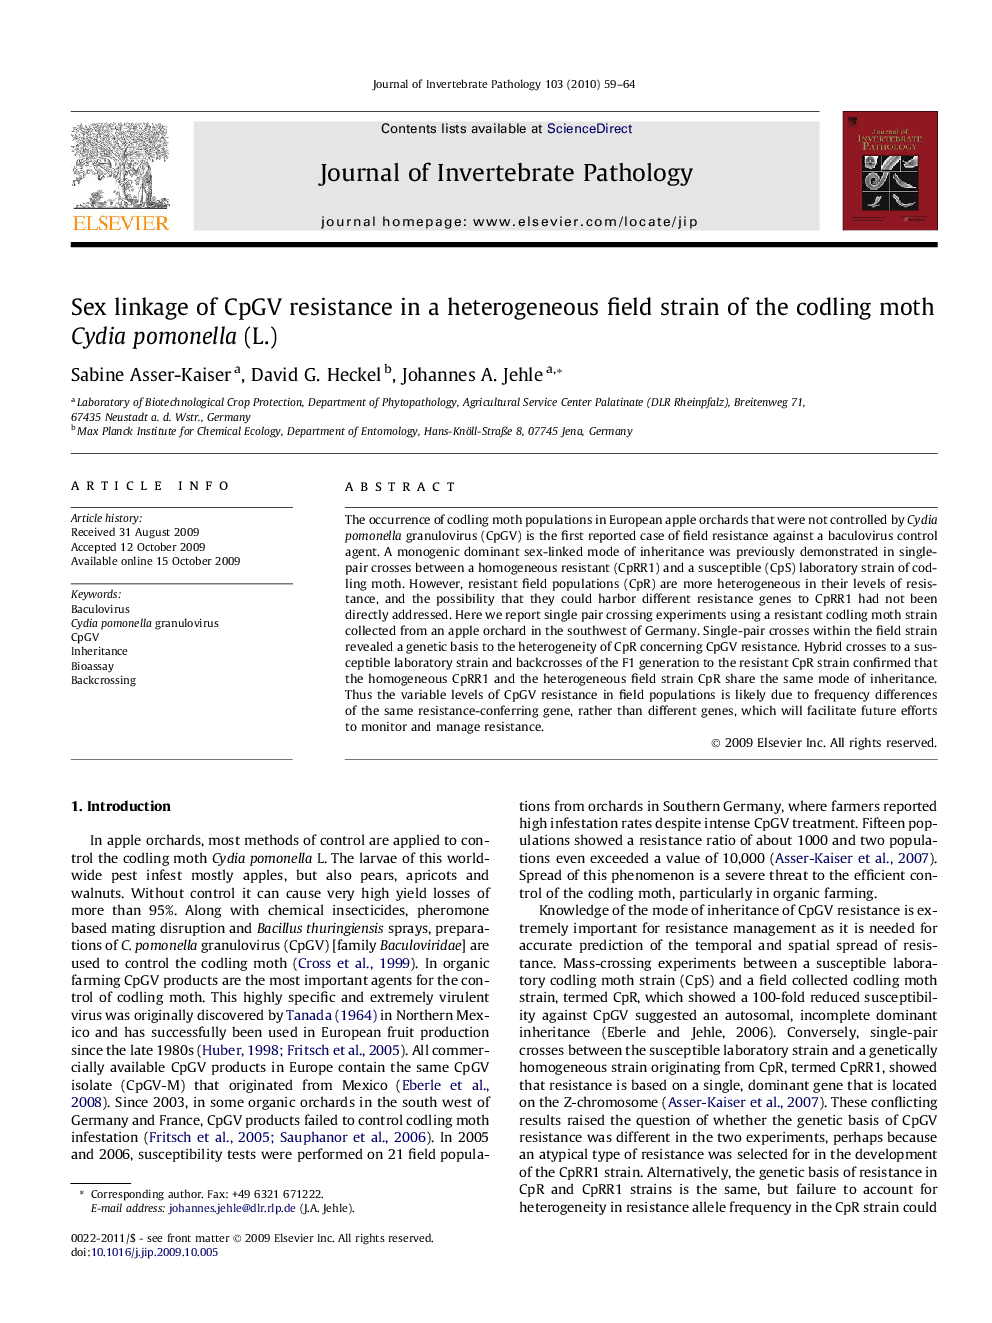 Sex linkage of CpGV resistance in a heterogeneous field strain of the codling moth Cydia pomonella (L.)